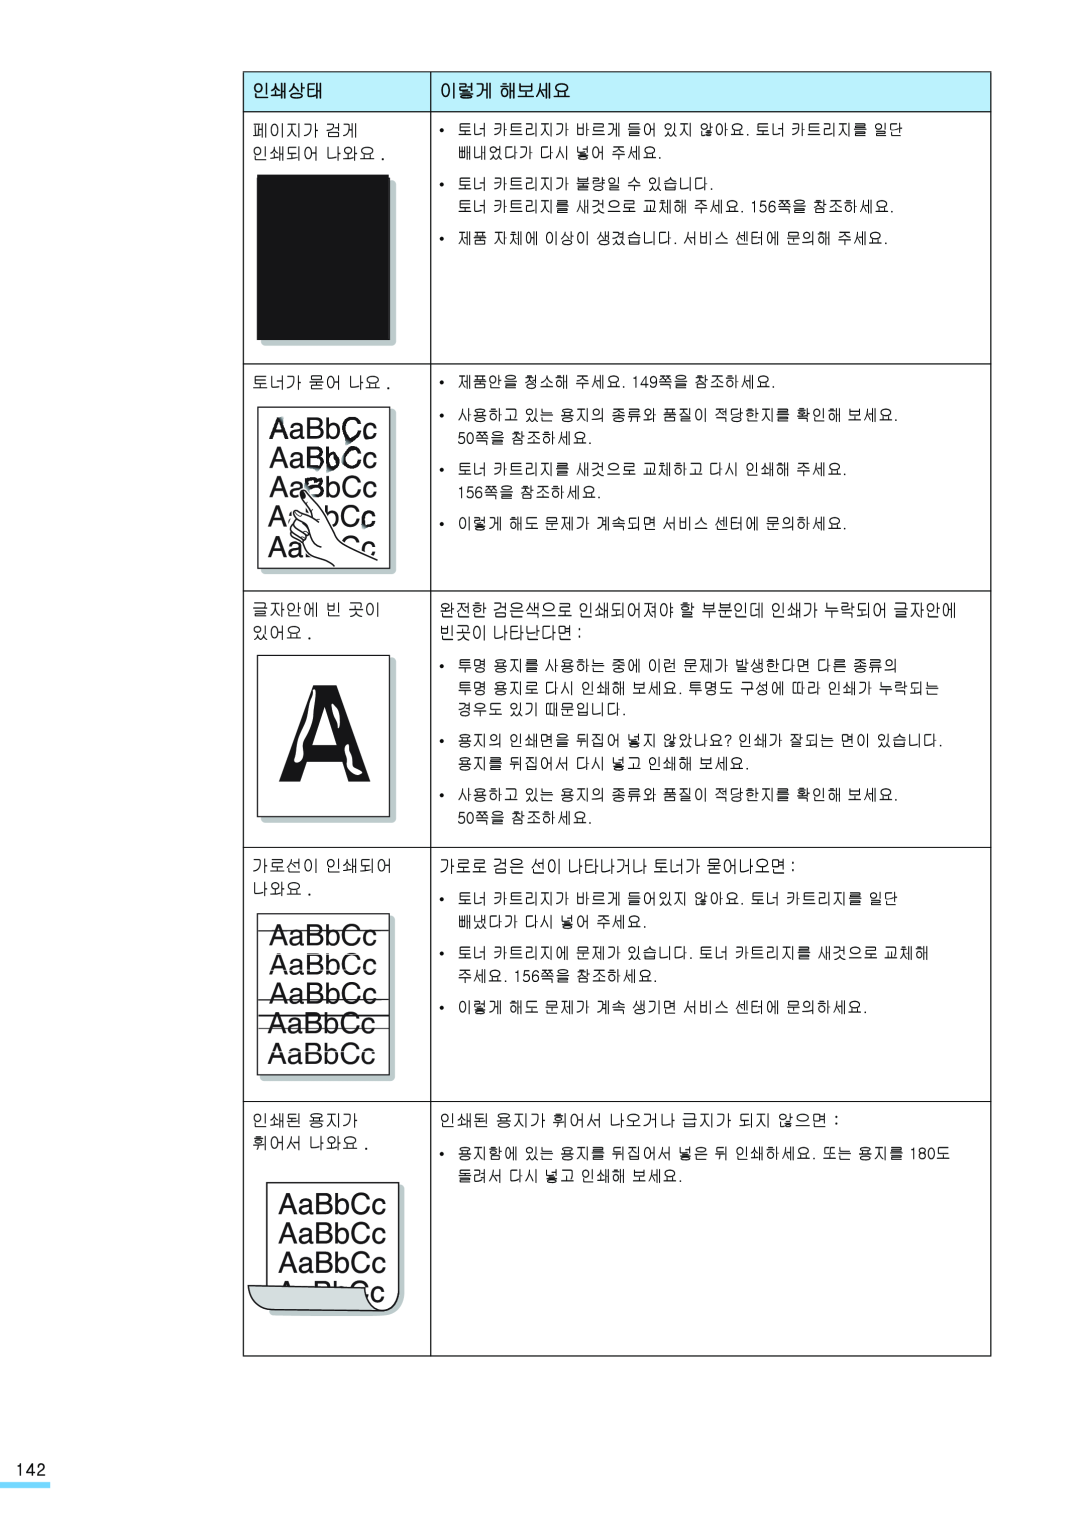 Samsung ML-2571N manual AaBbCc, 인쇄상태, 이렇게 해보세요, 빈곳이 나타난다면, 가로로 검은 선이 나타나거나 토너가 묻어나오면 